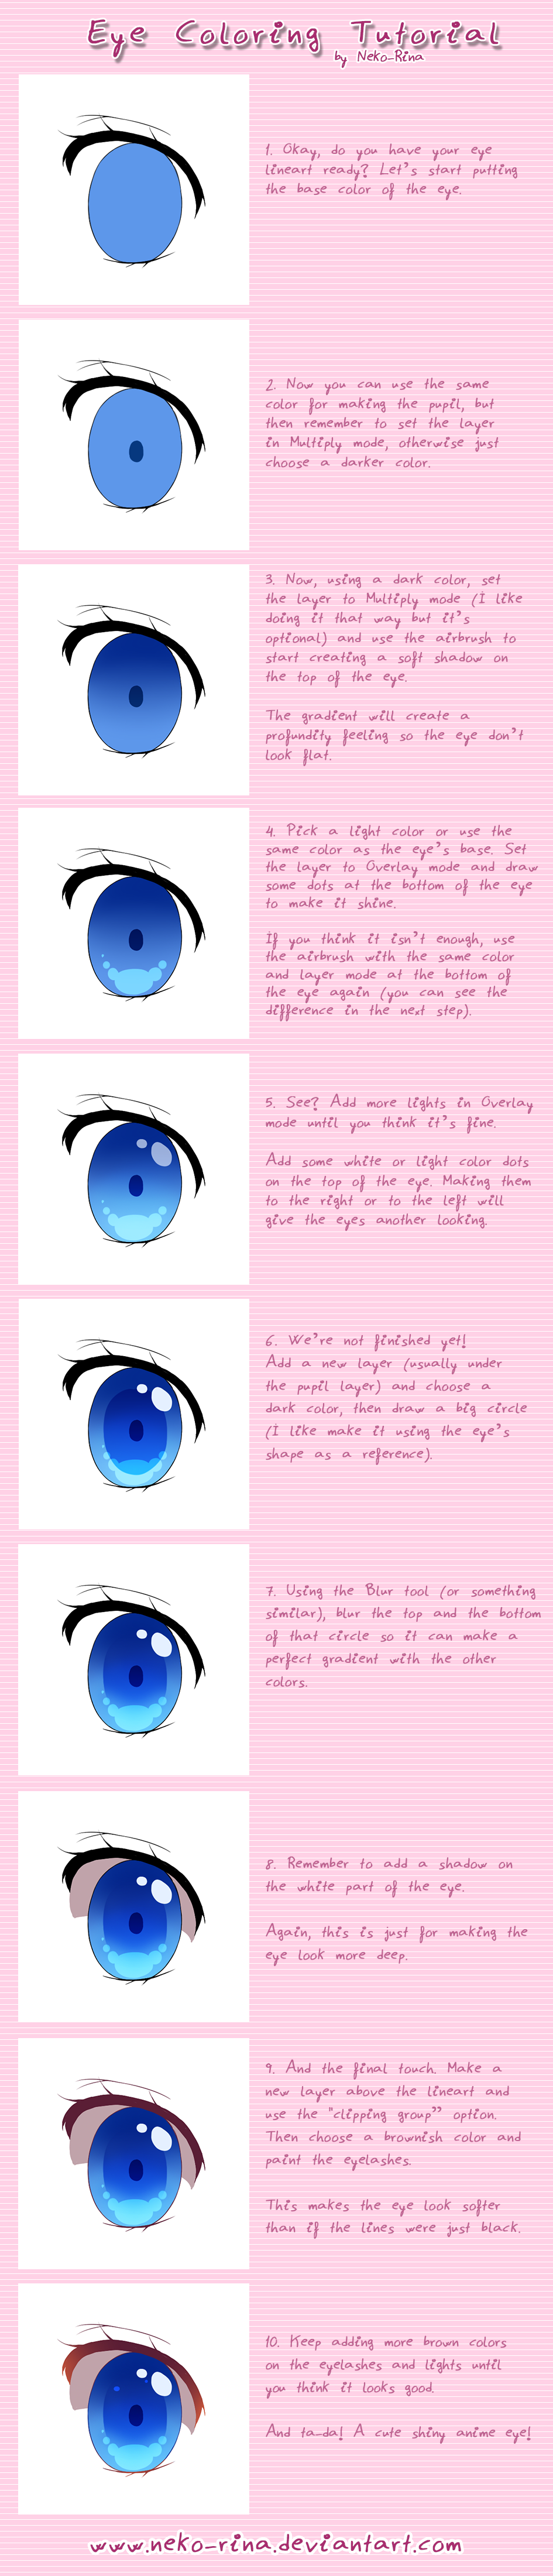 Coloring eyes